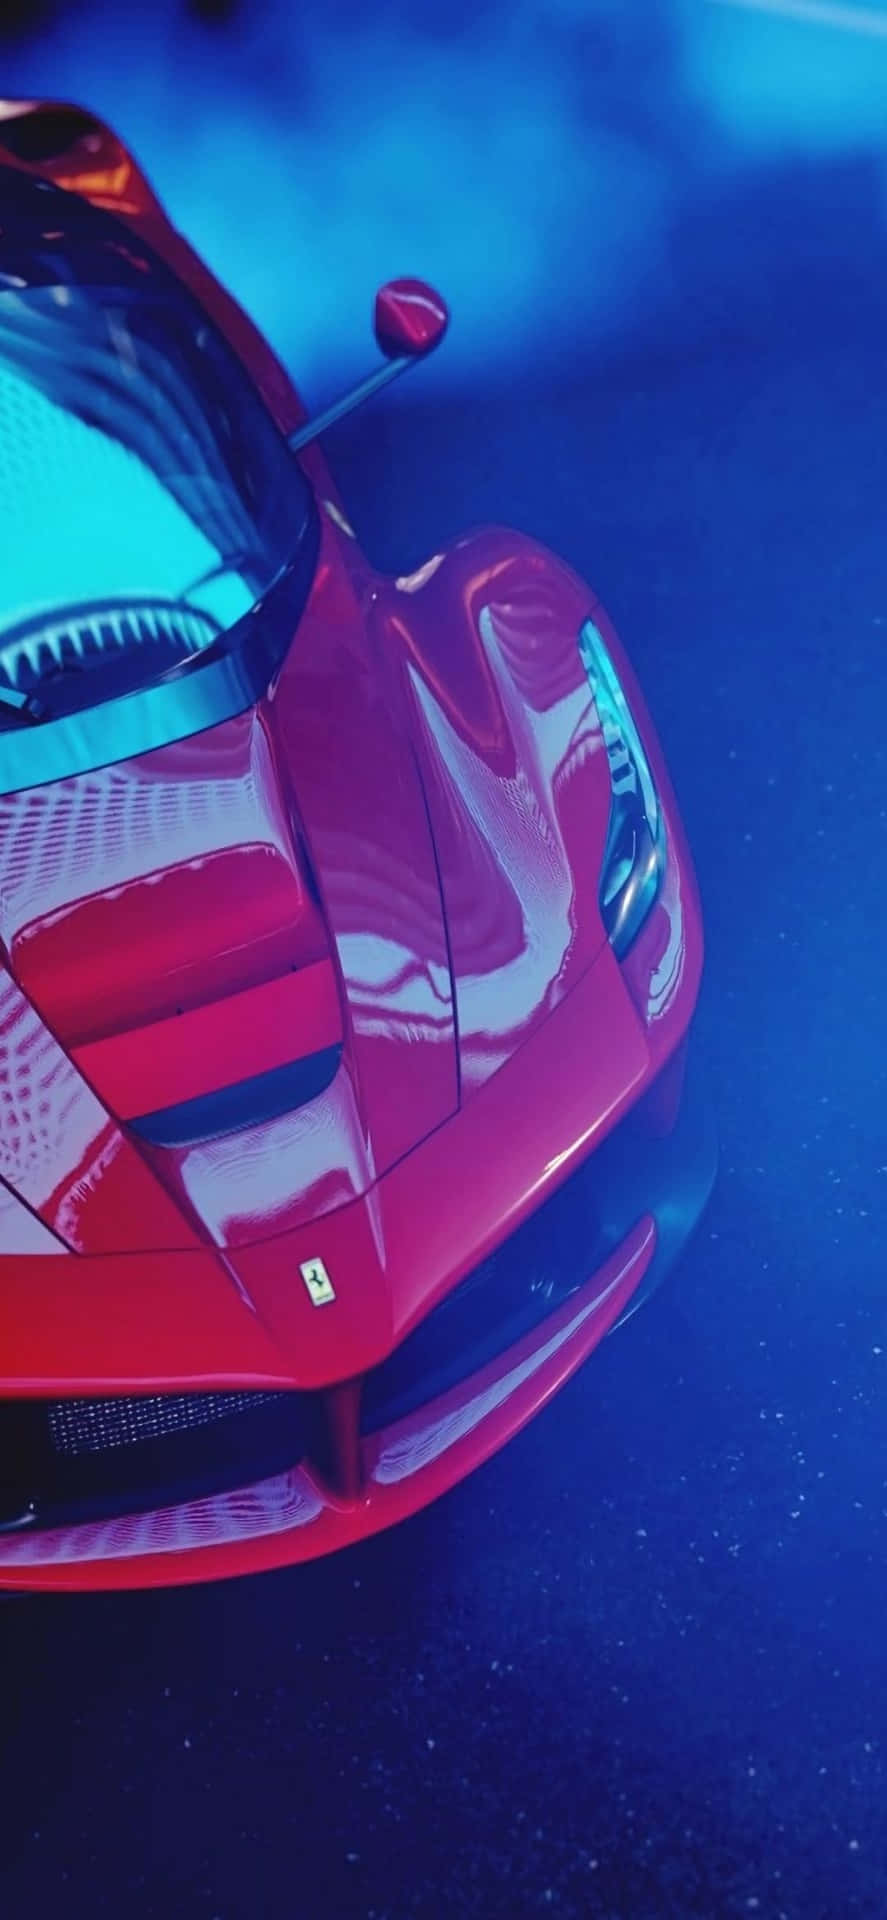 Fondode Pantalla Para Iphone Xs Max: Ferrari Brillante En Rojo Cubierto De Humo Azul.